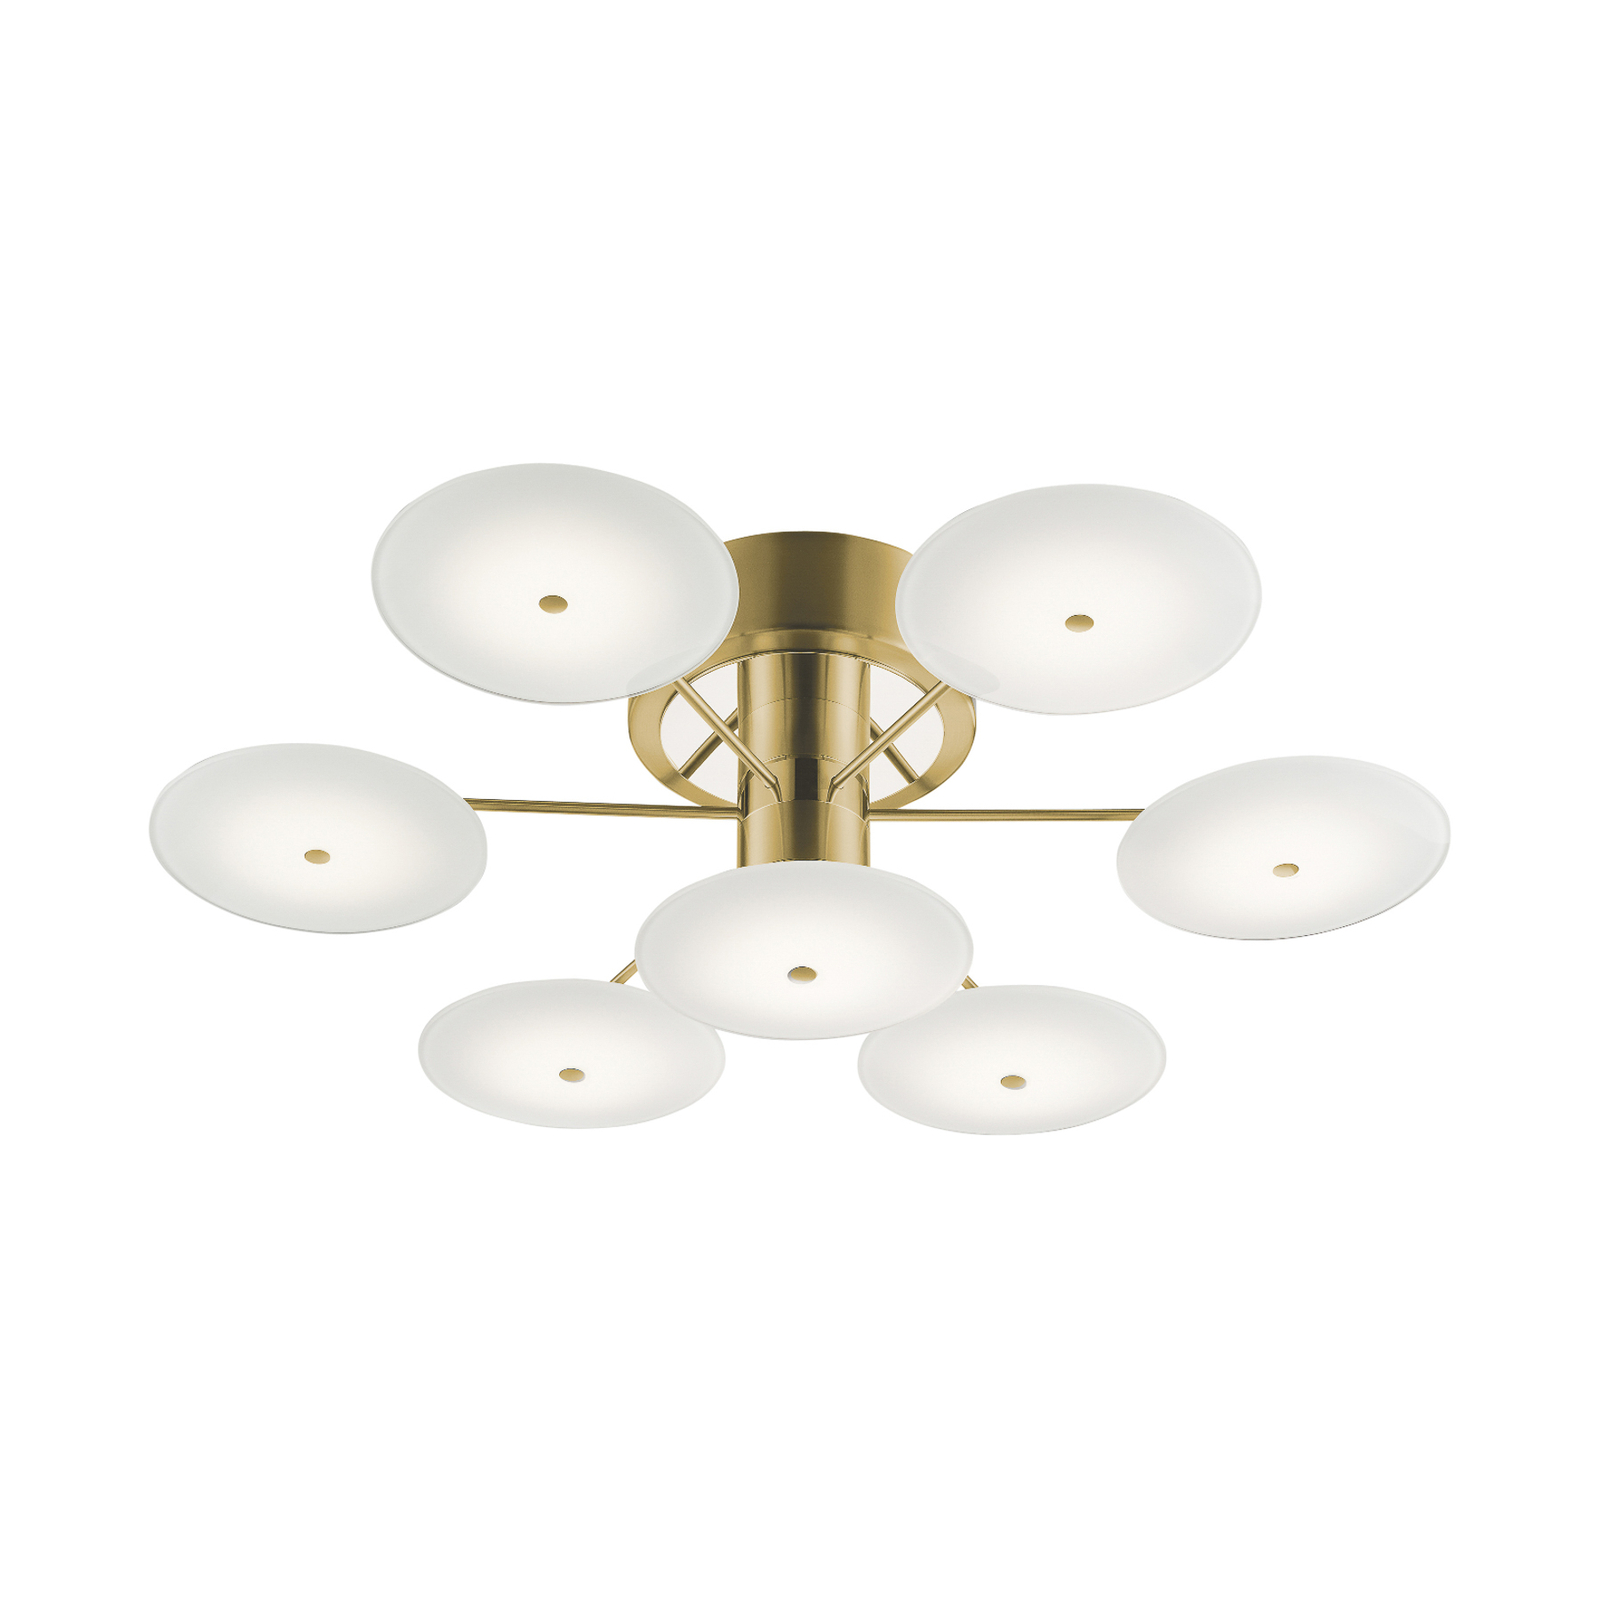 B+M LEUCHTEN Astra ceiling lamp, 7-bulb, brass